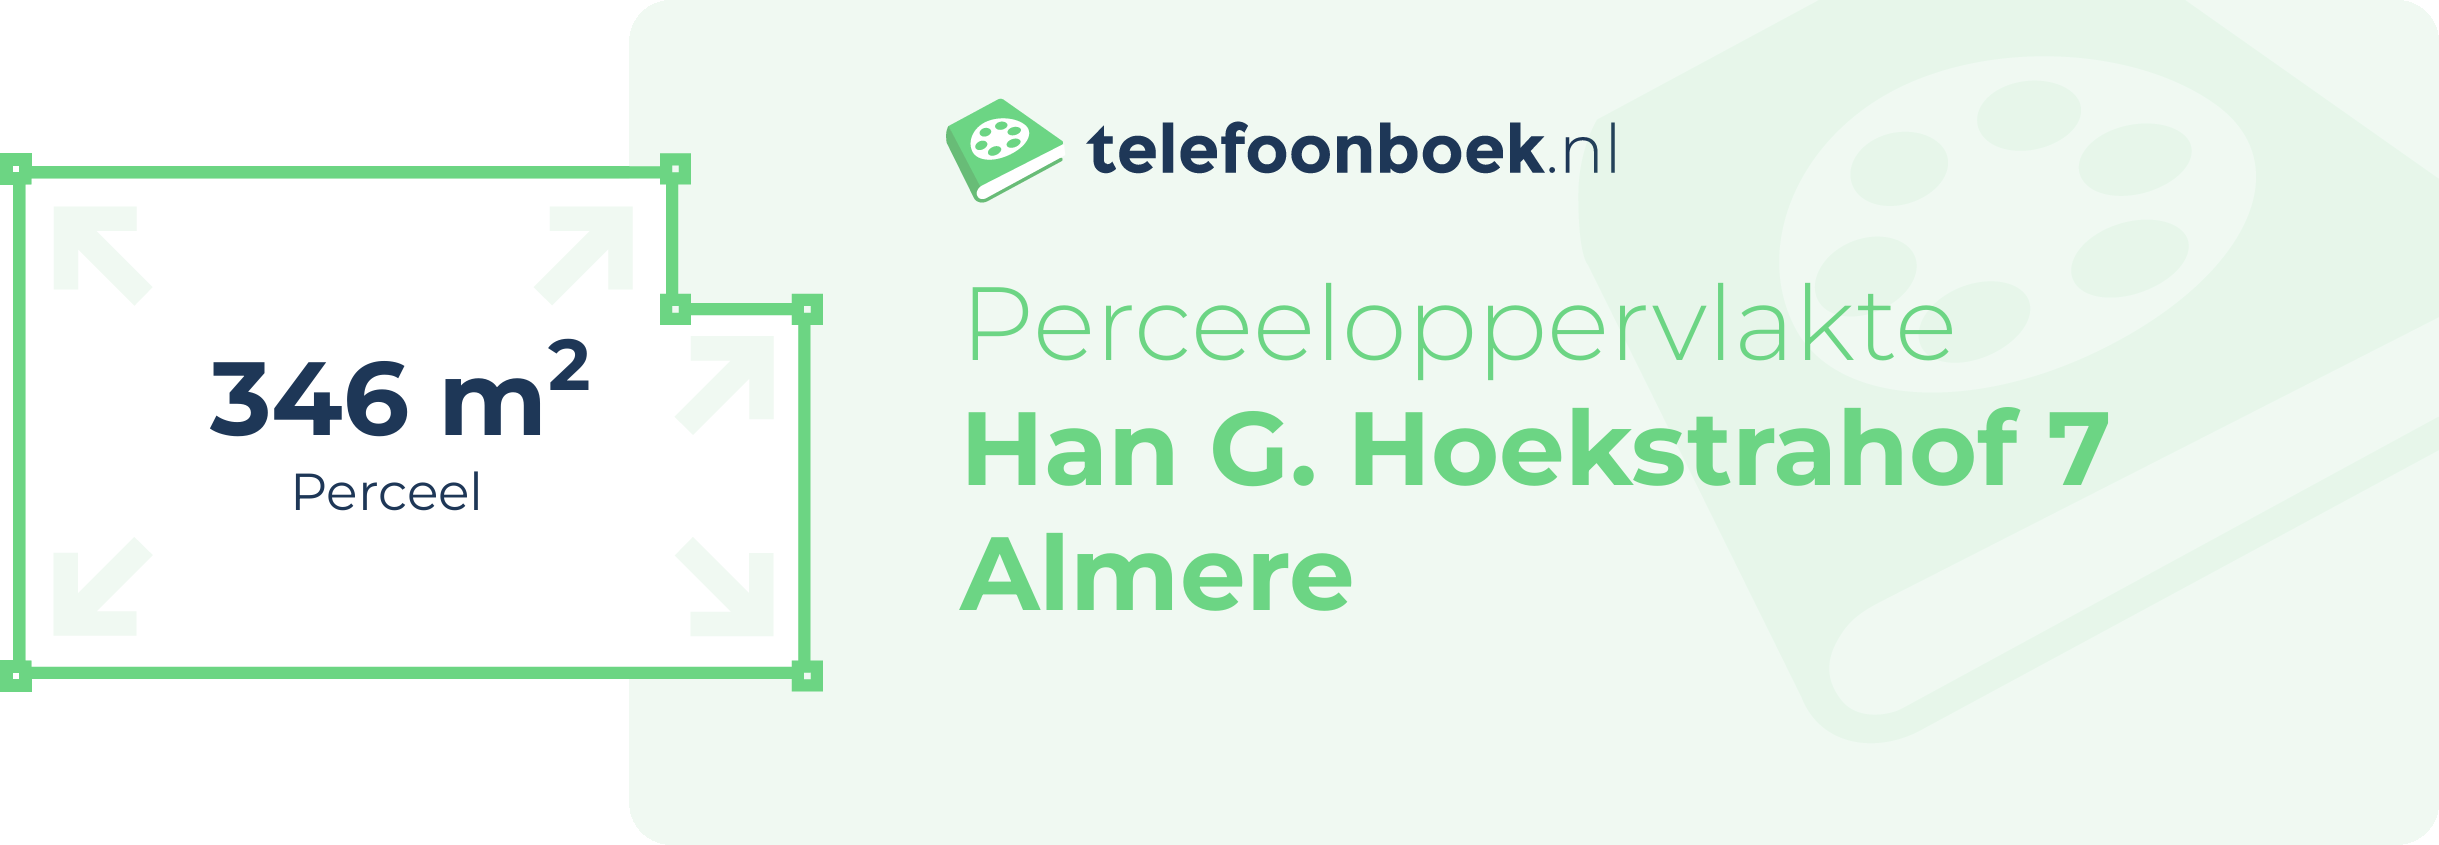 Perceeloppervlakte Han G. Hoekstrahof 7 Almere